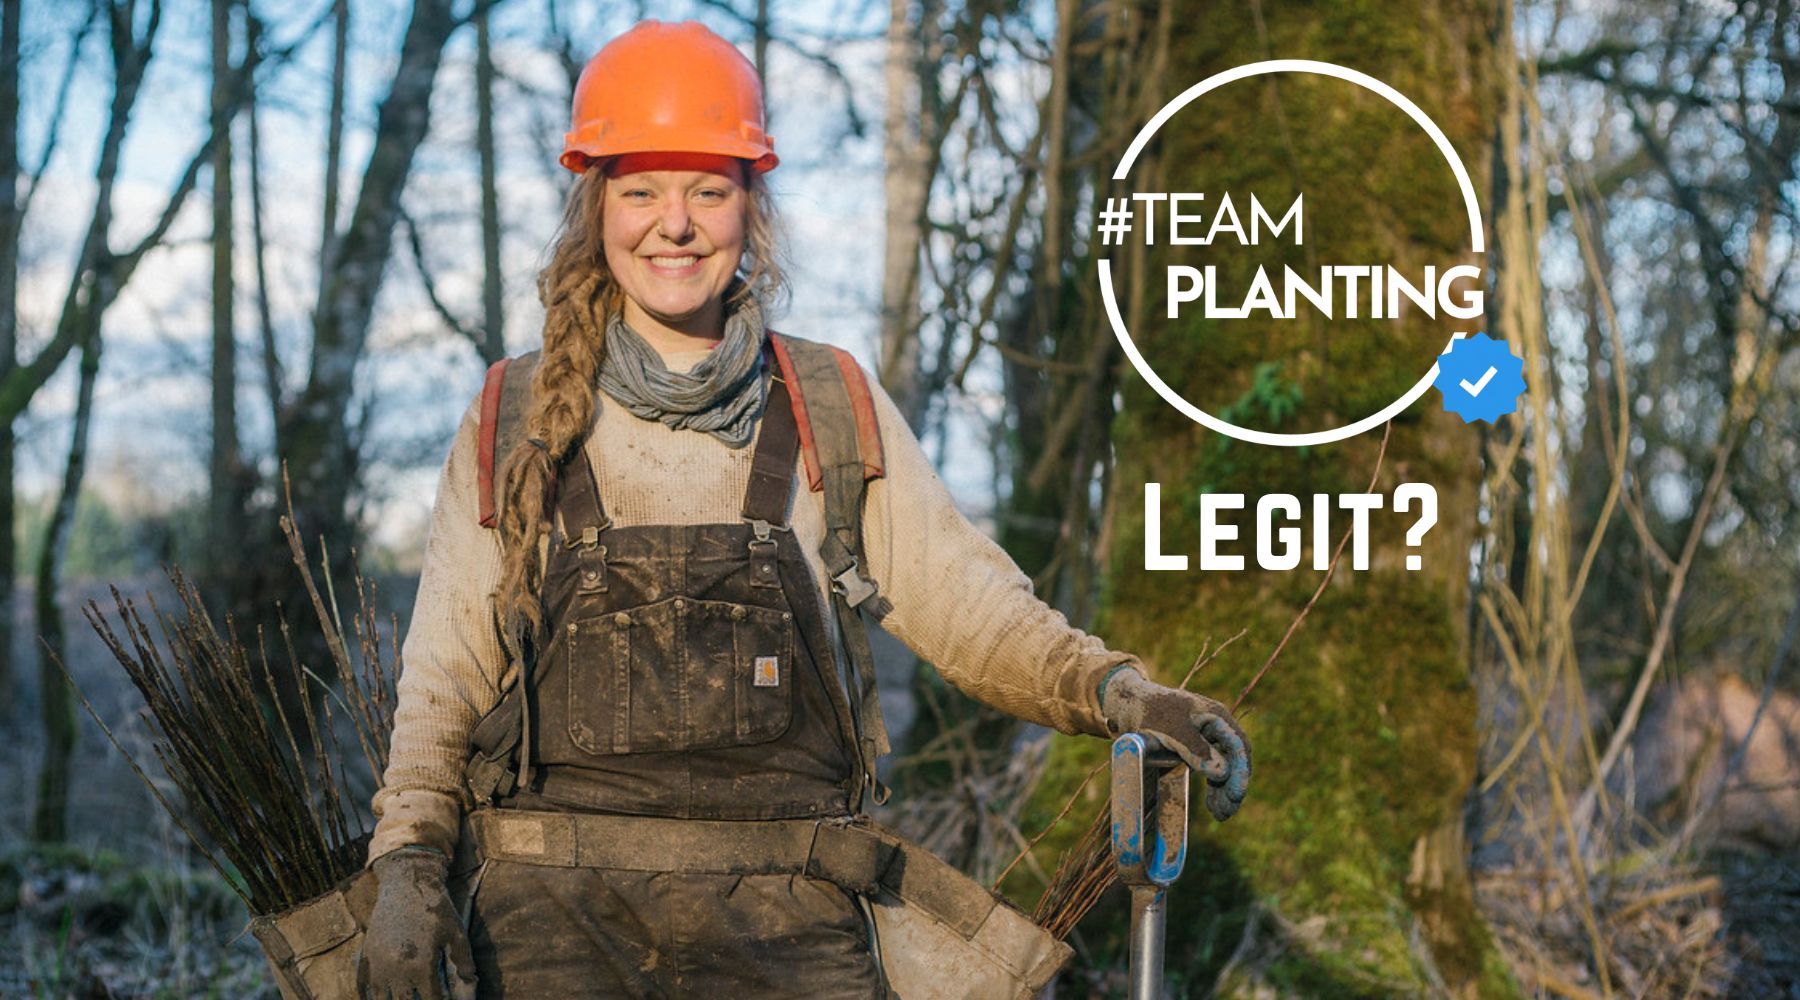 People often ask: Is TeamPlanting Legit?